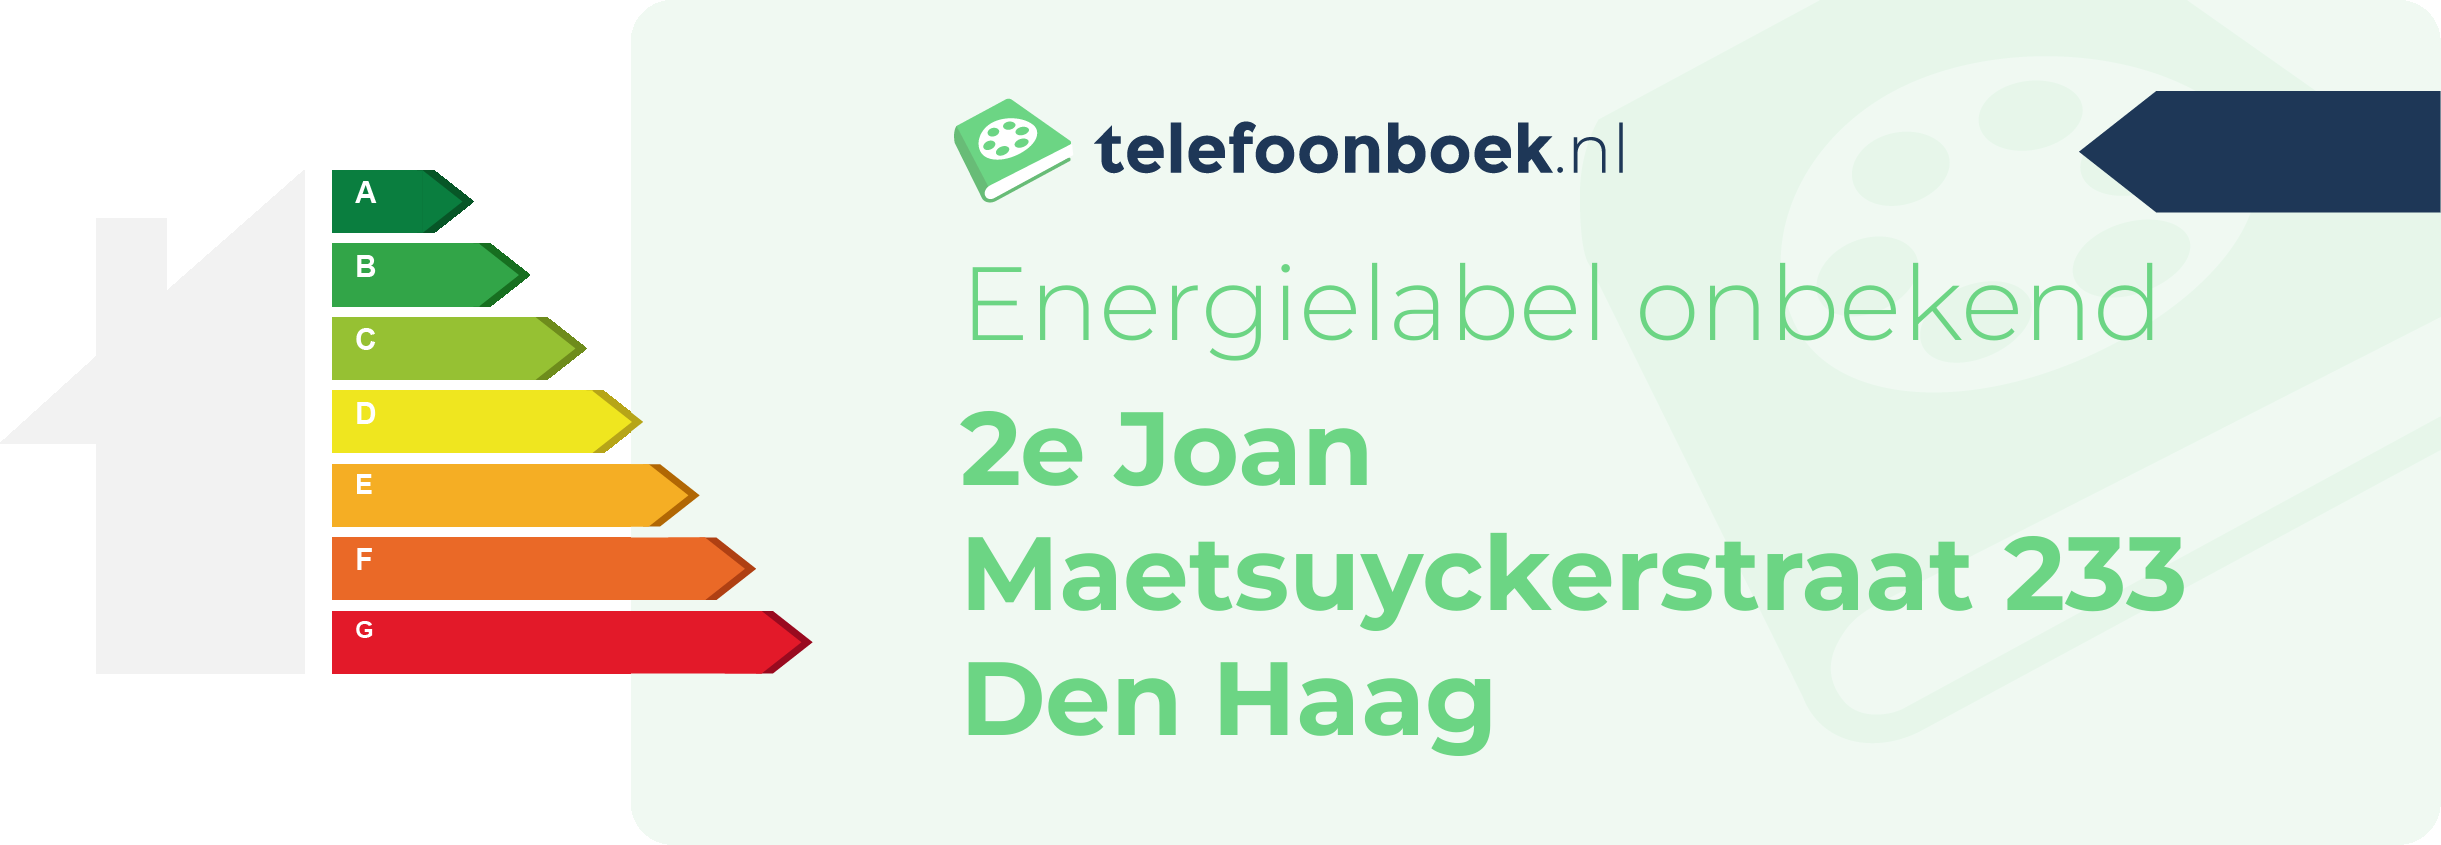 Energielabel 2e Joan Maetsuyckerstraat 233 Den Haag